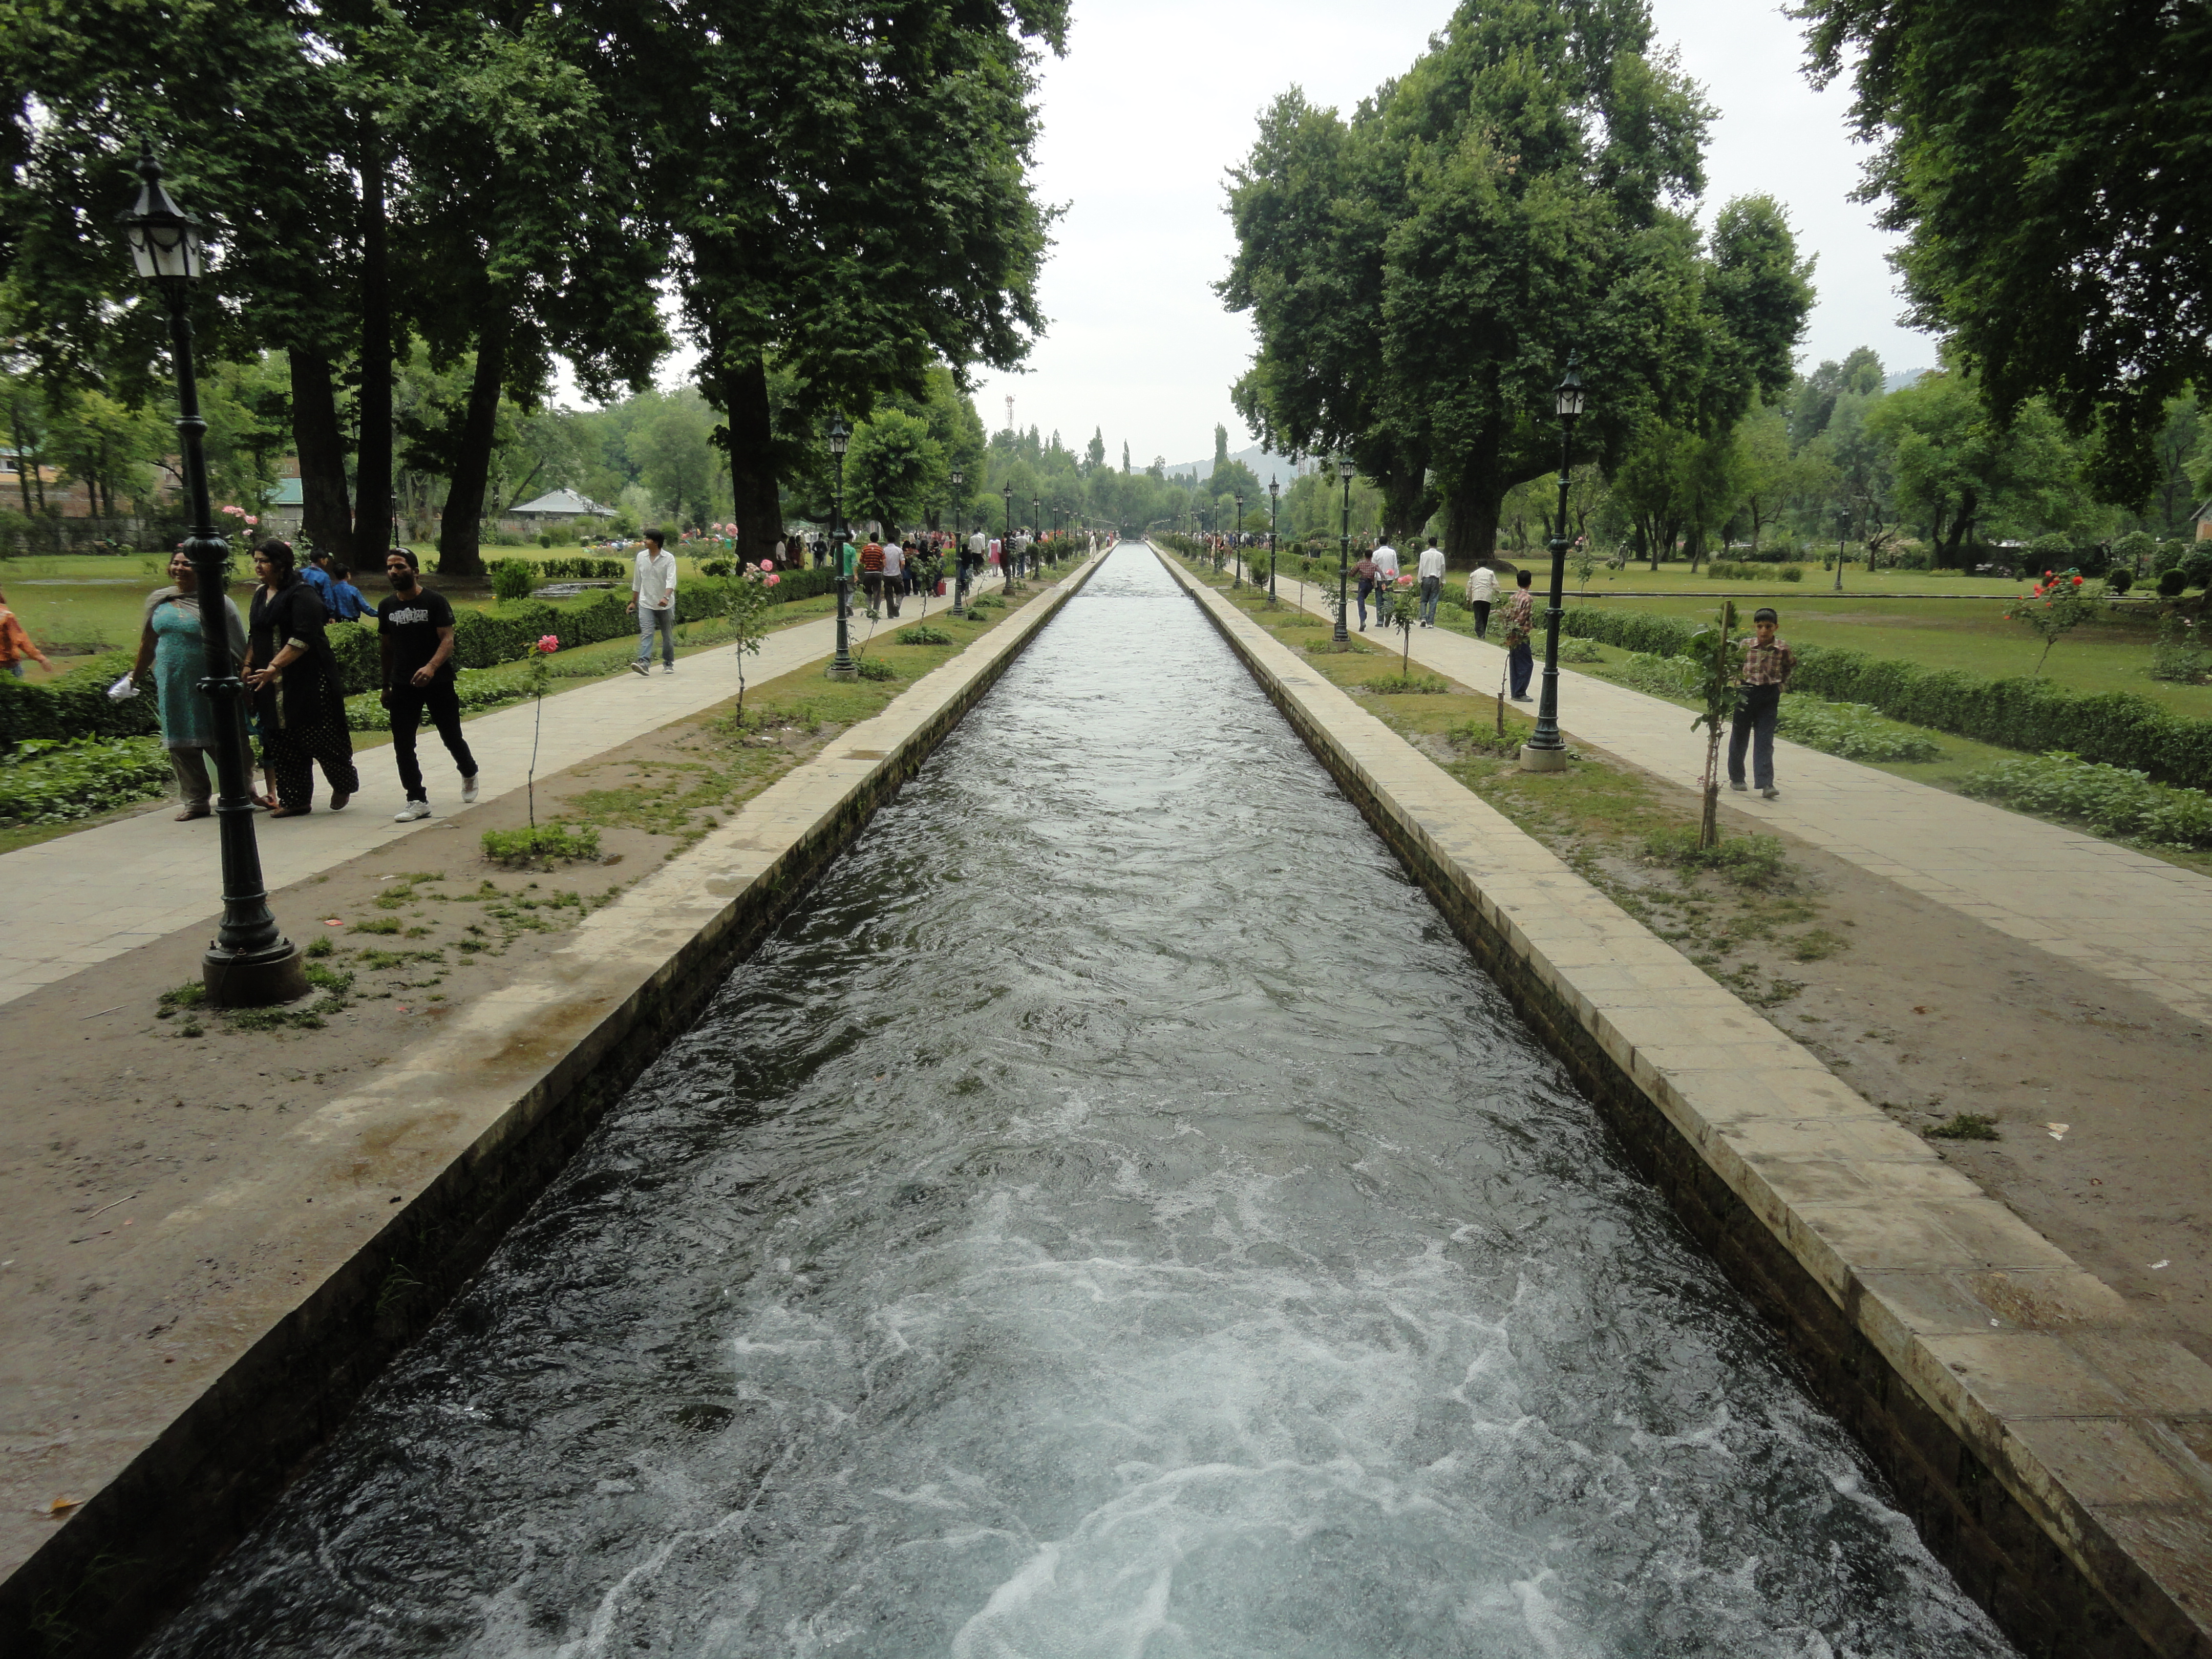 File:Water canal in mughal garden verinag.jpg - Wikimedia Commons